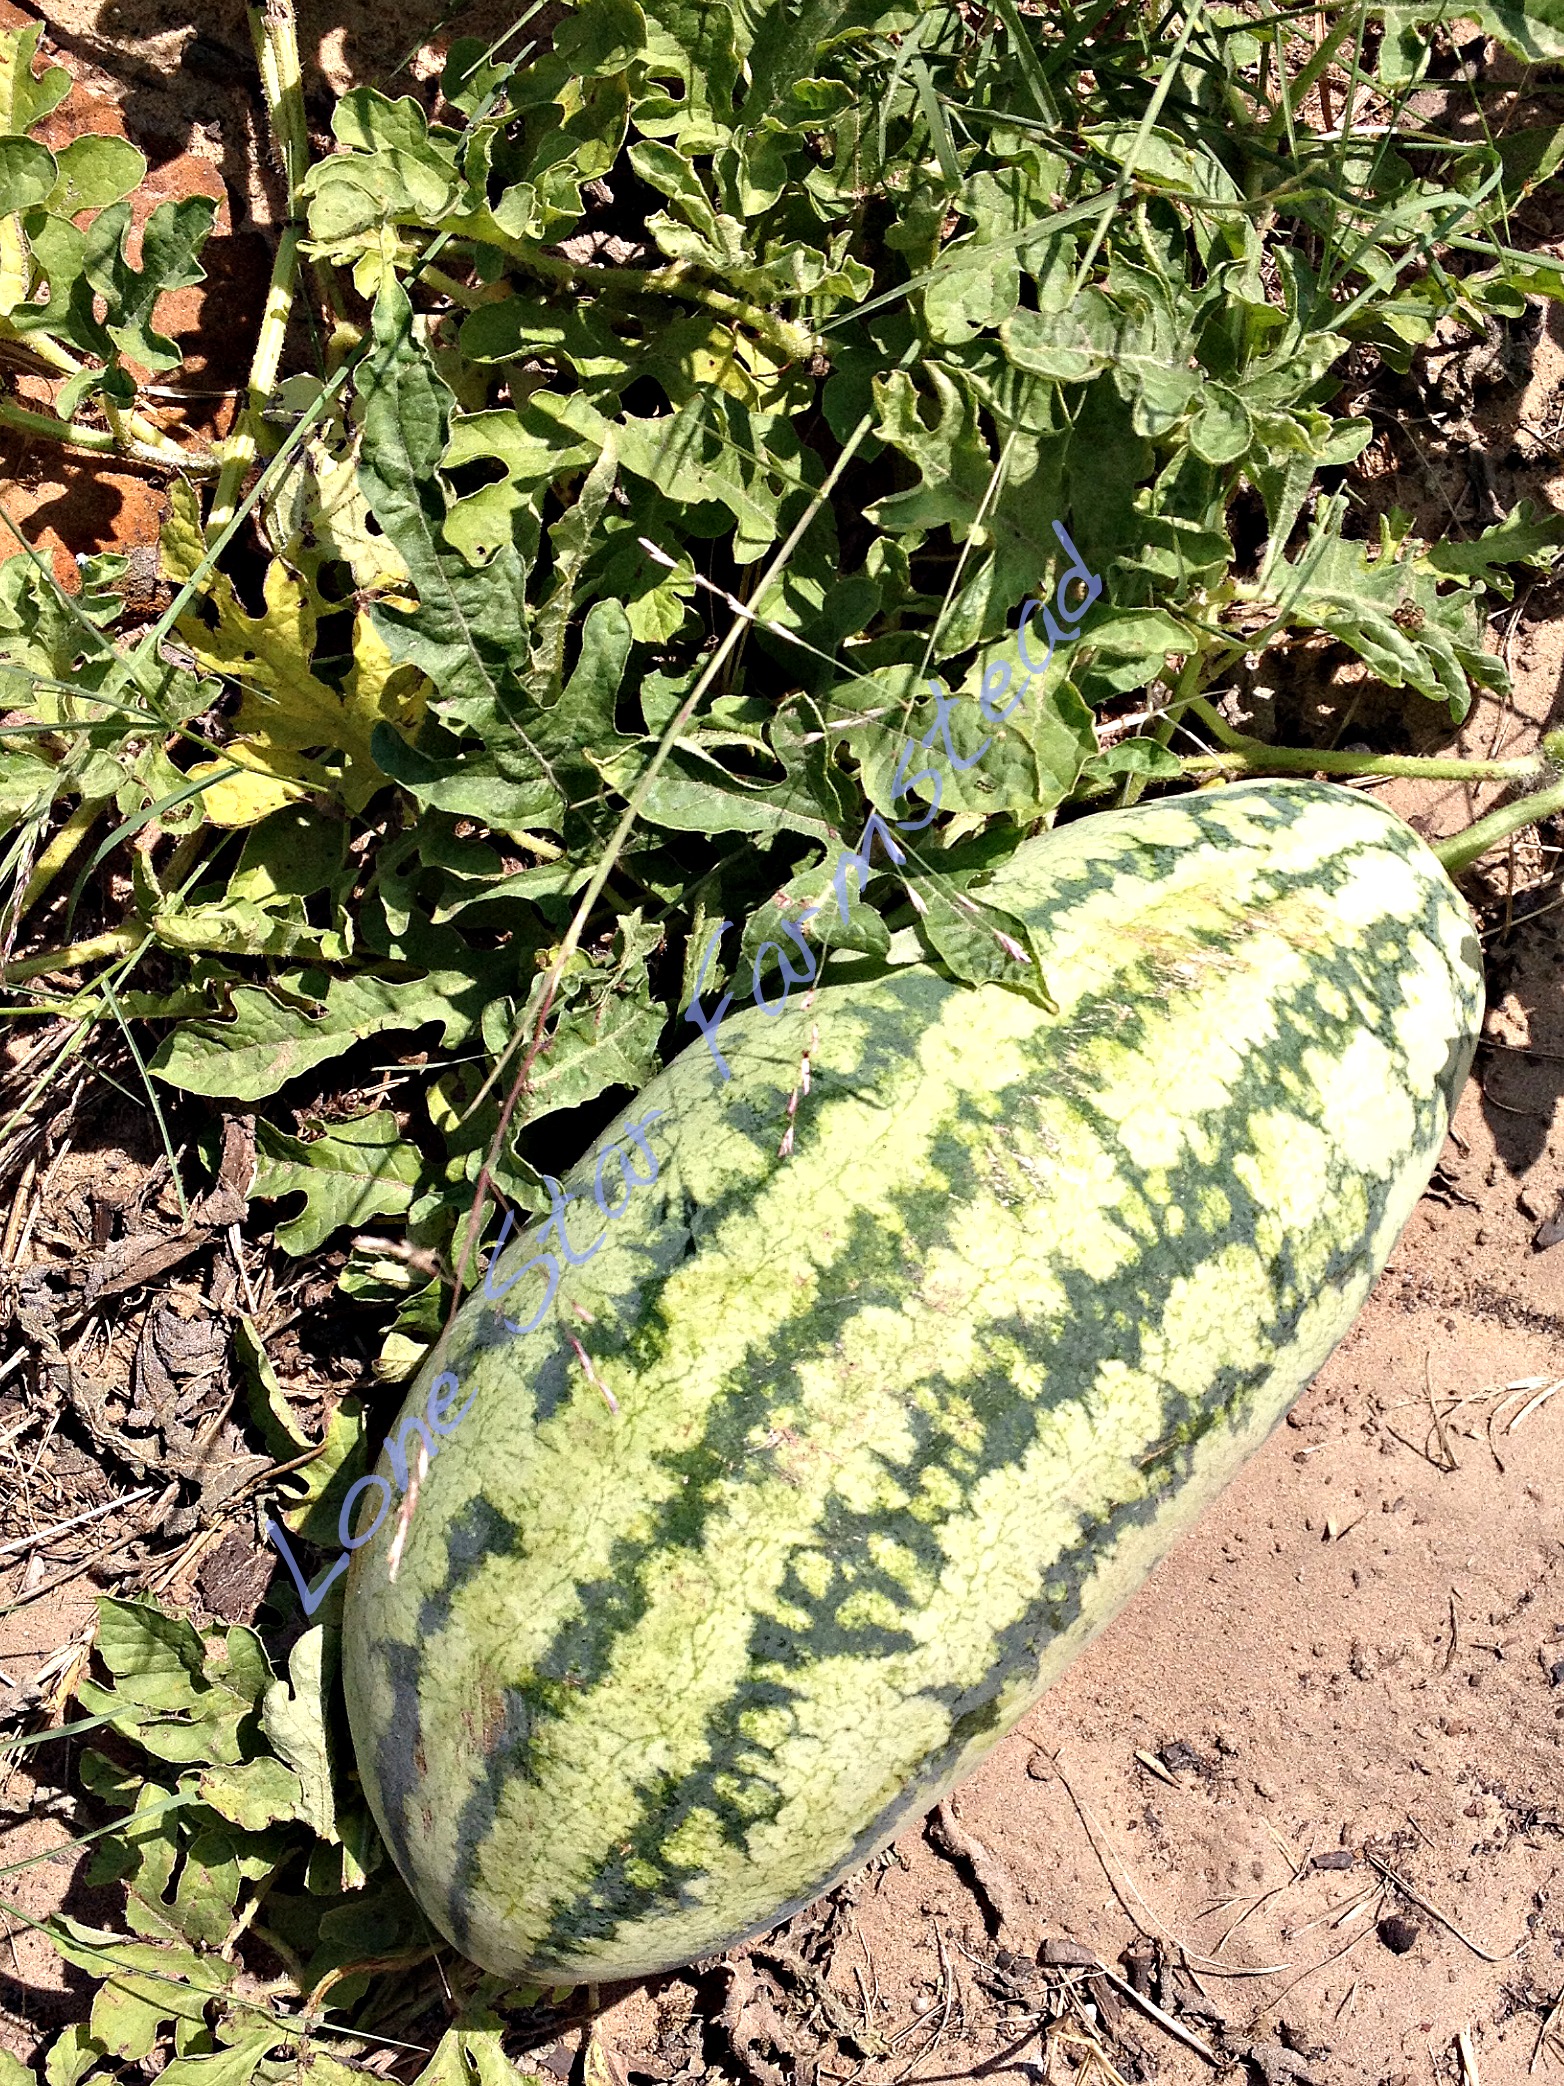 Watermelon on the Vine